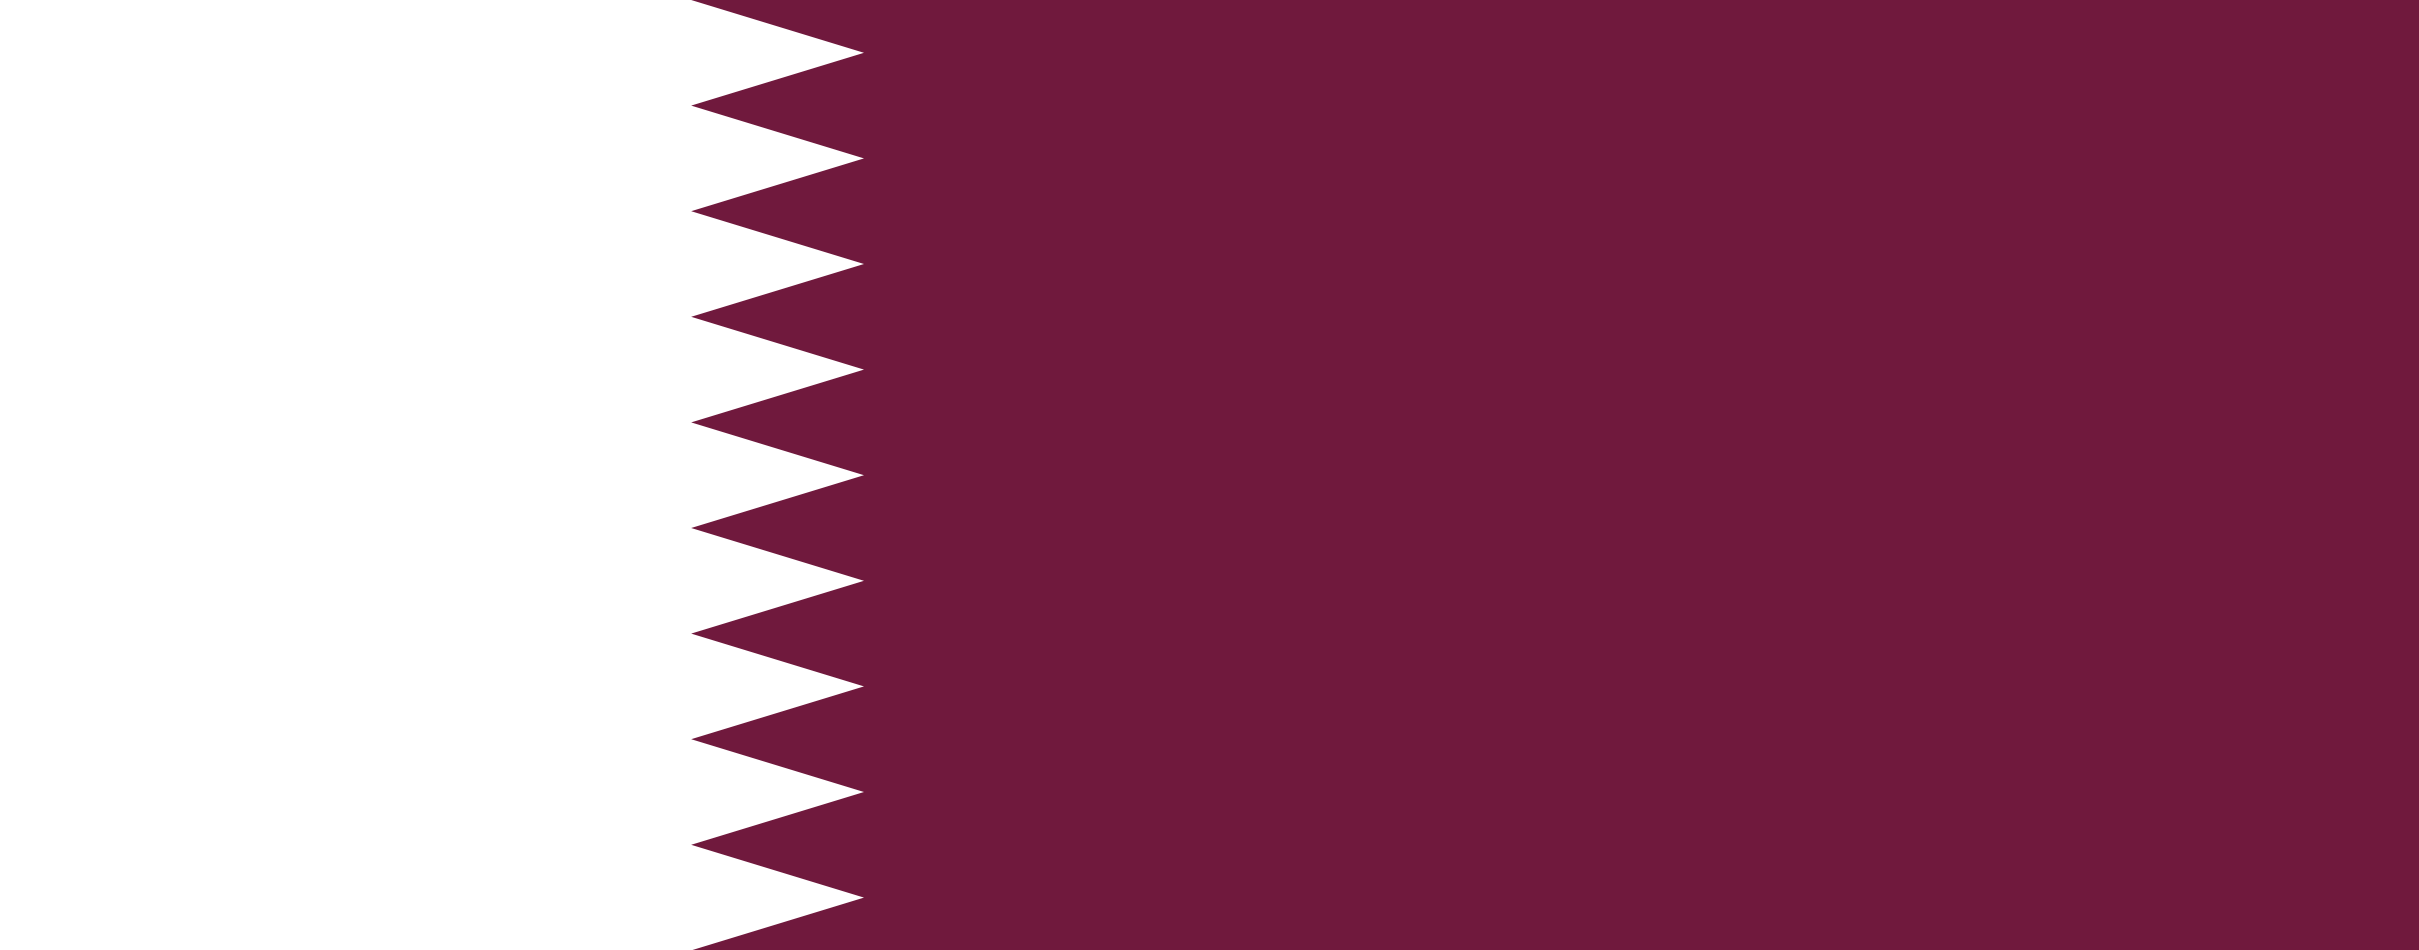 پرچم قطر